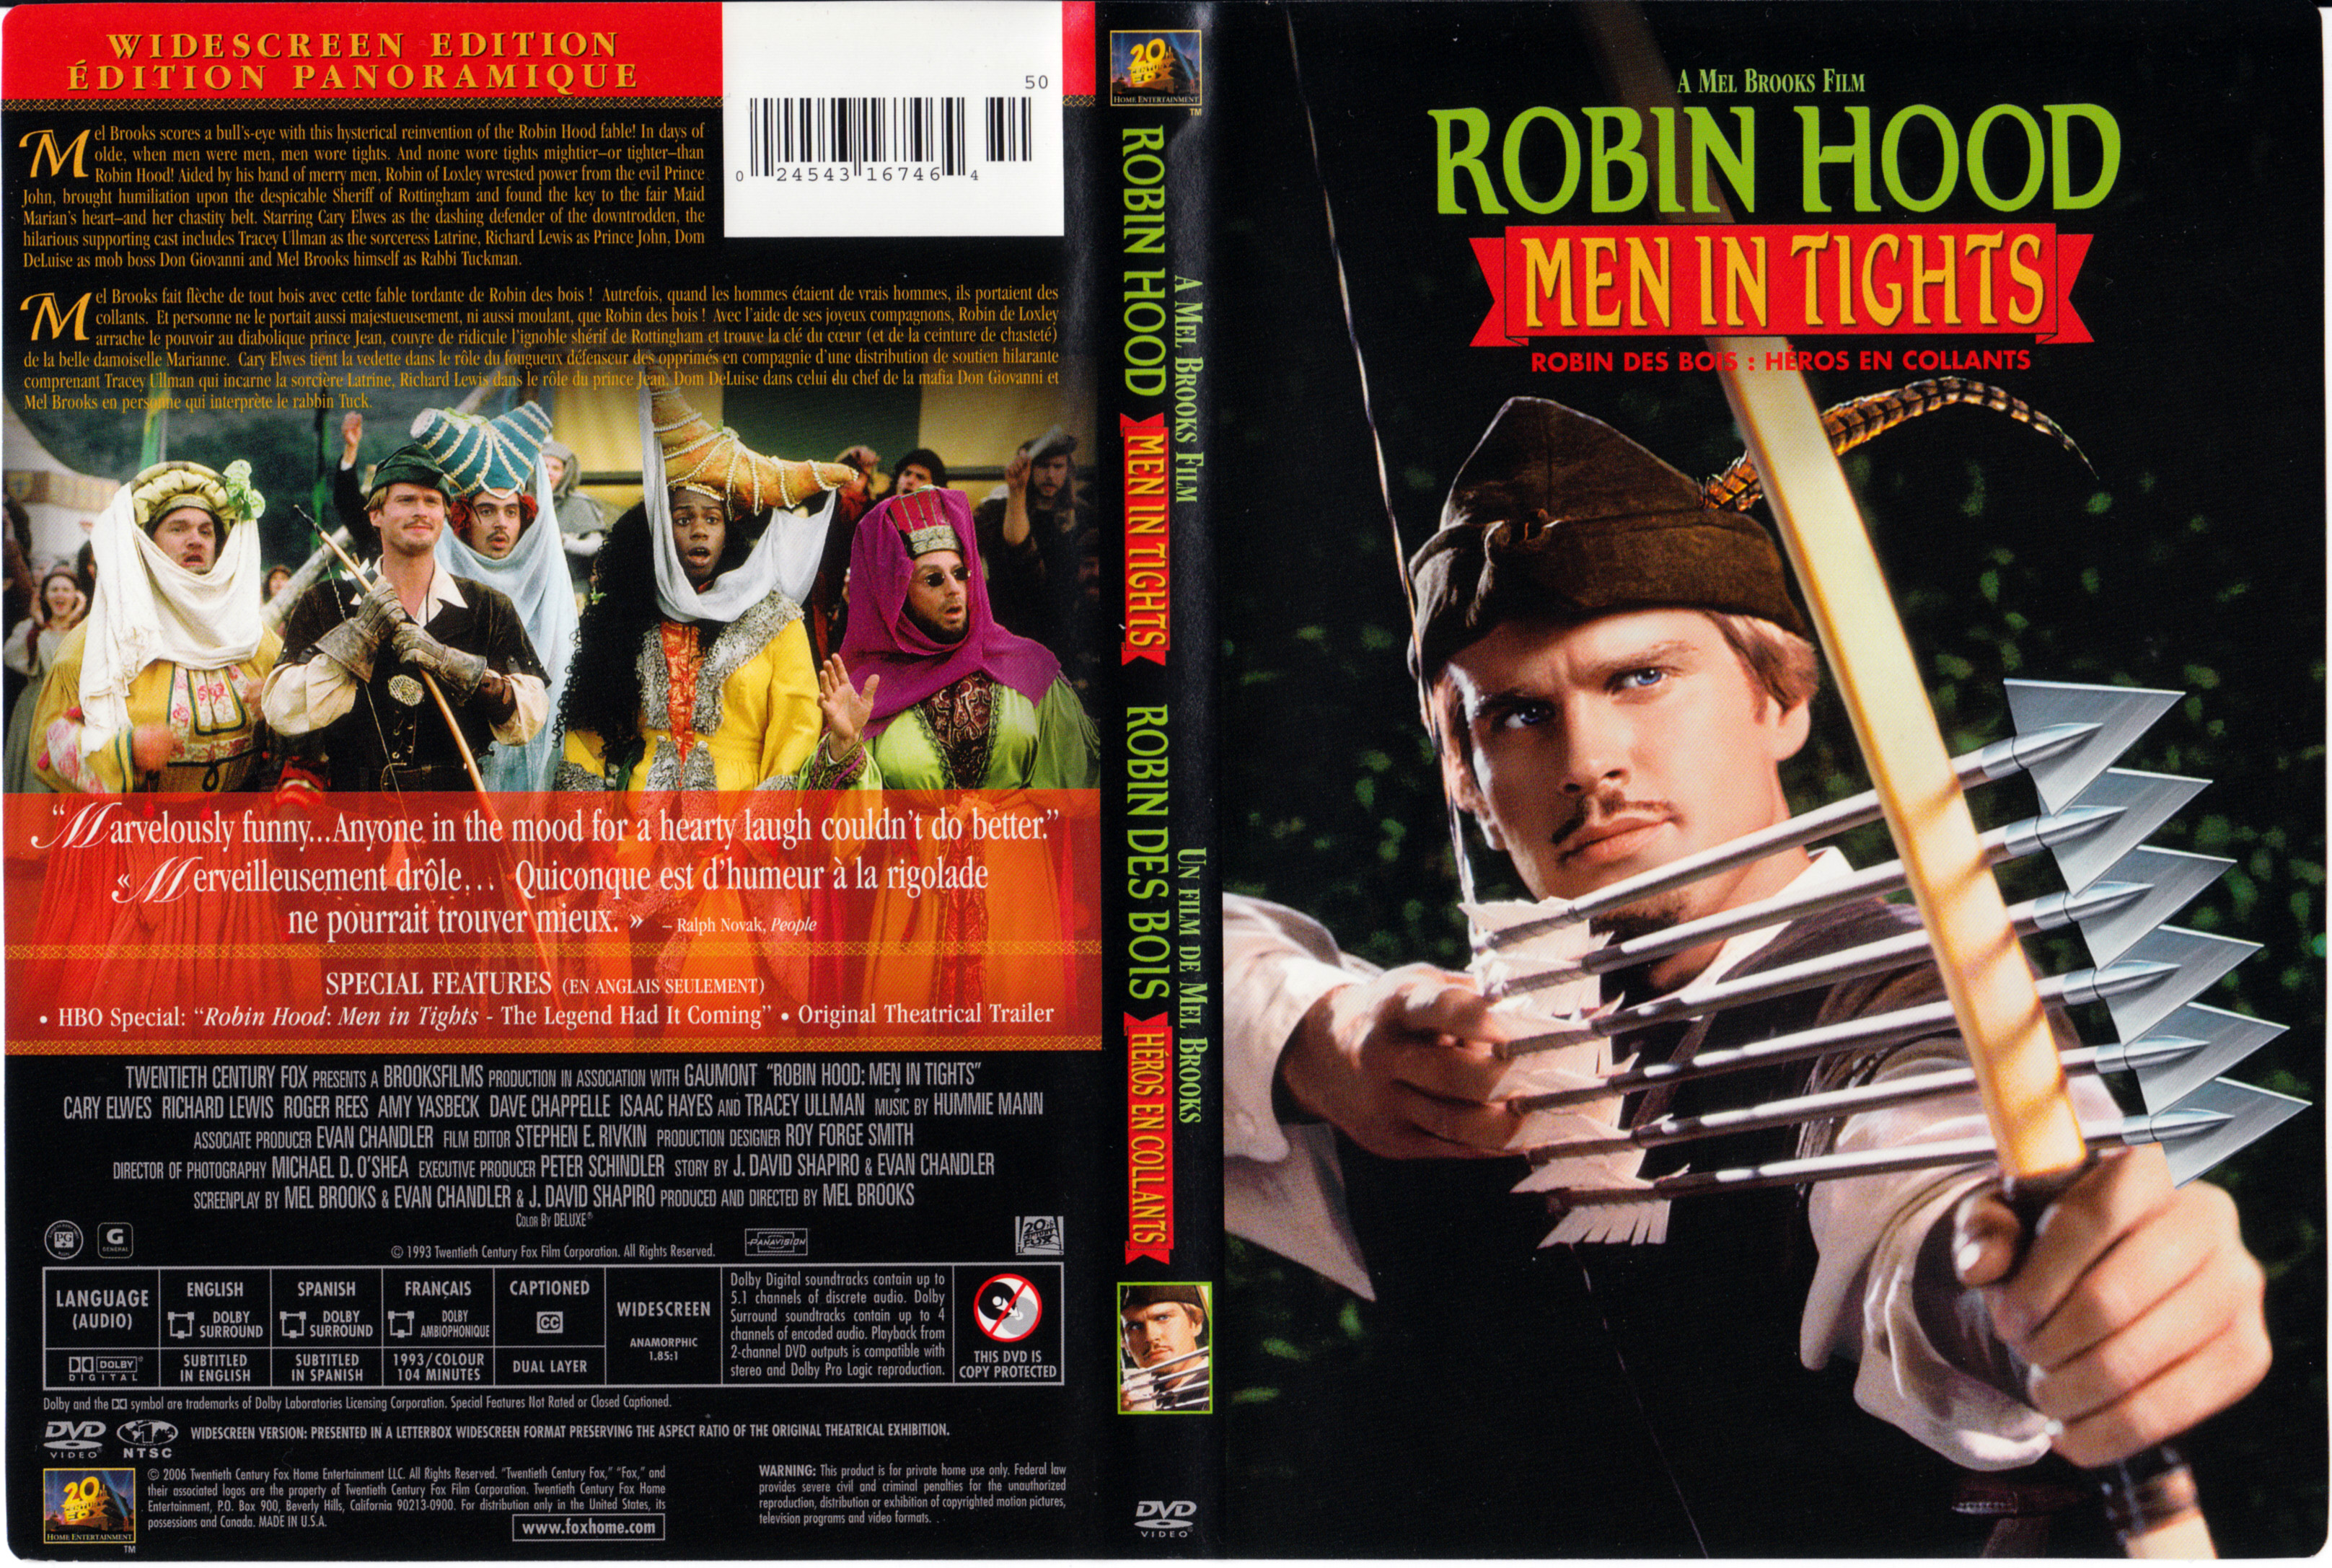 Jaquette DVD Robin Hood Men in tights - Robin des bois Hros en collants (Canadienne)